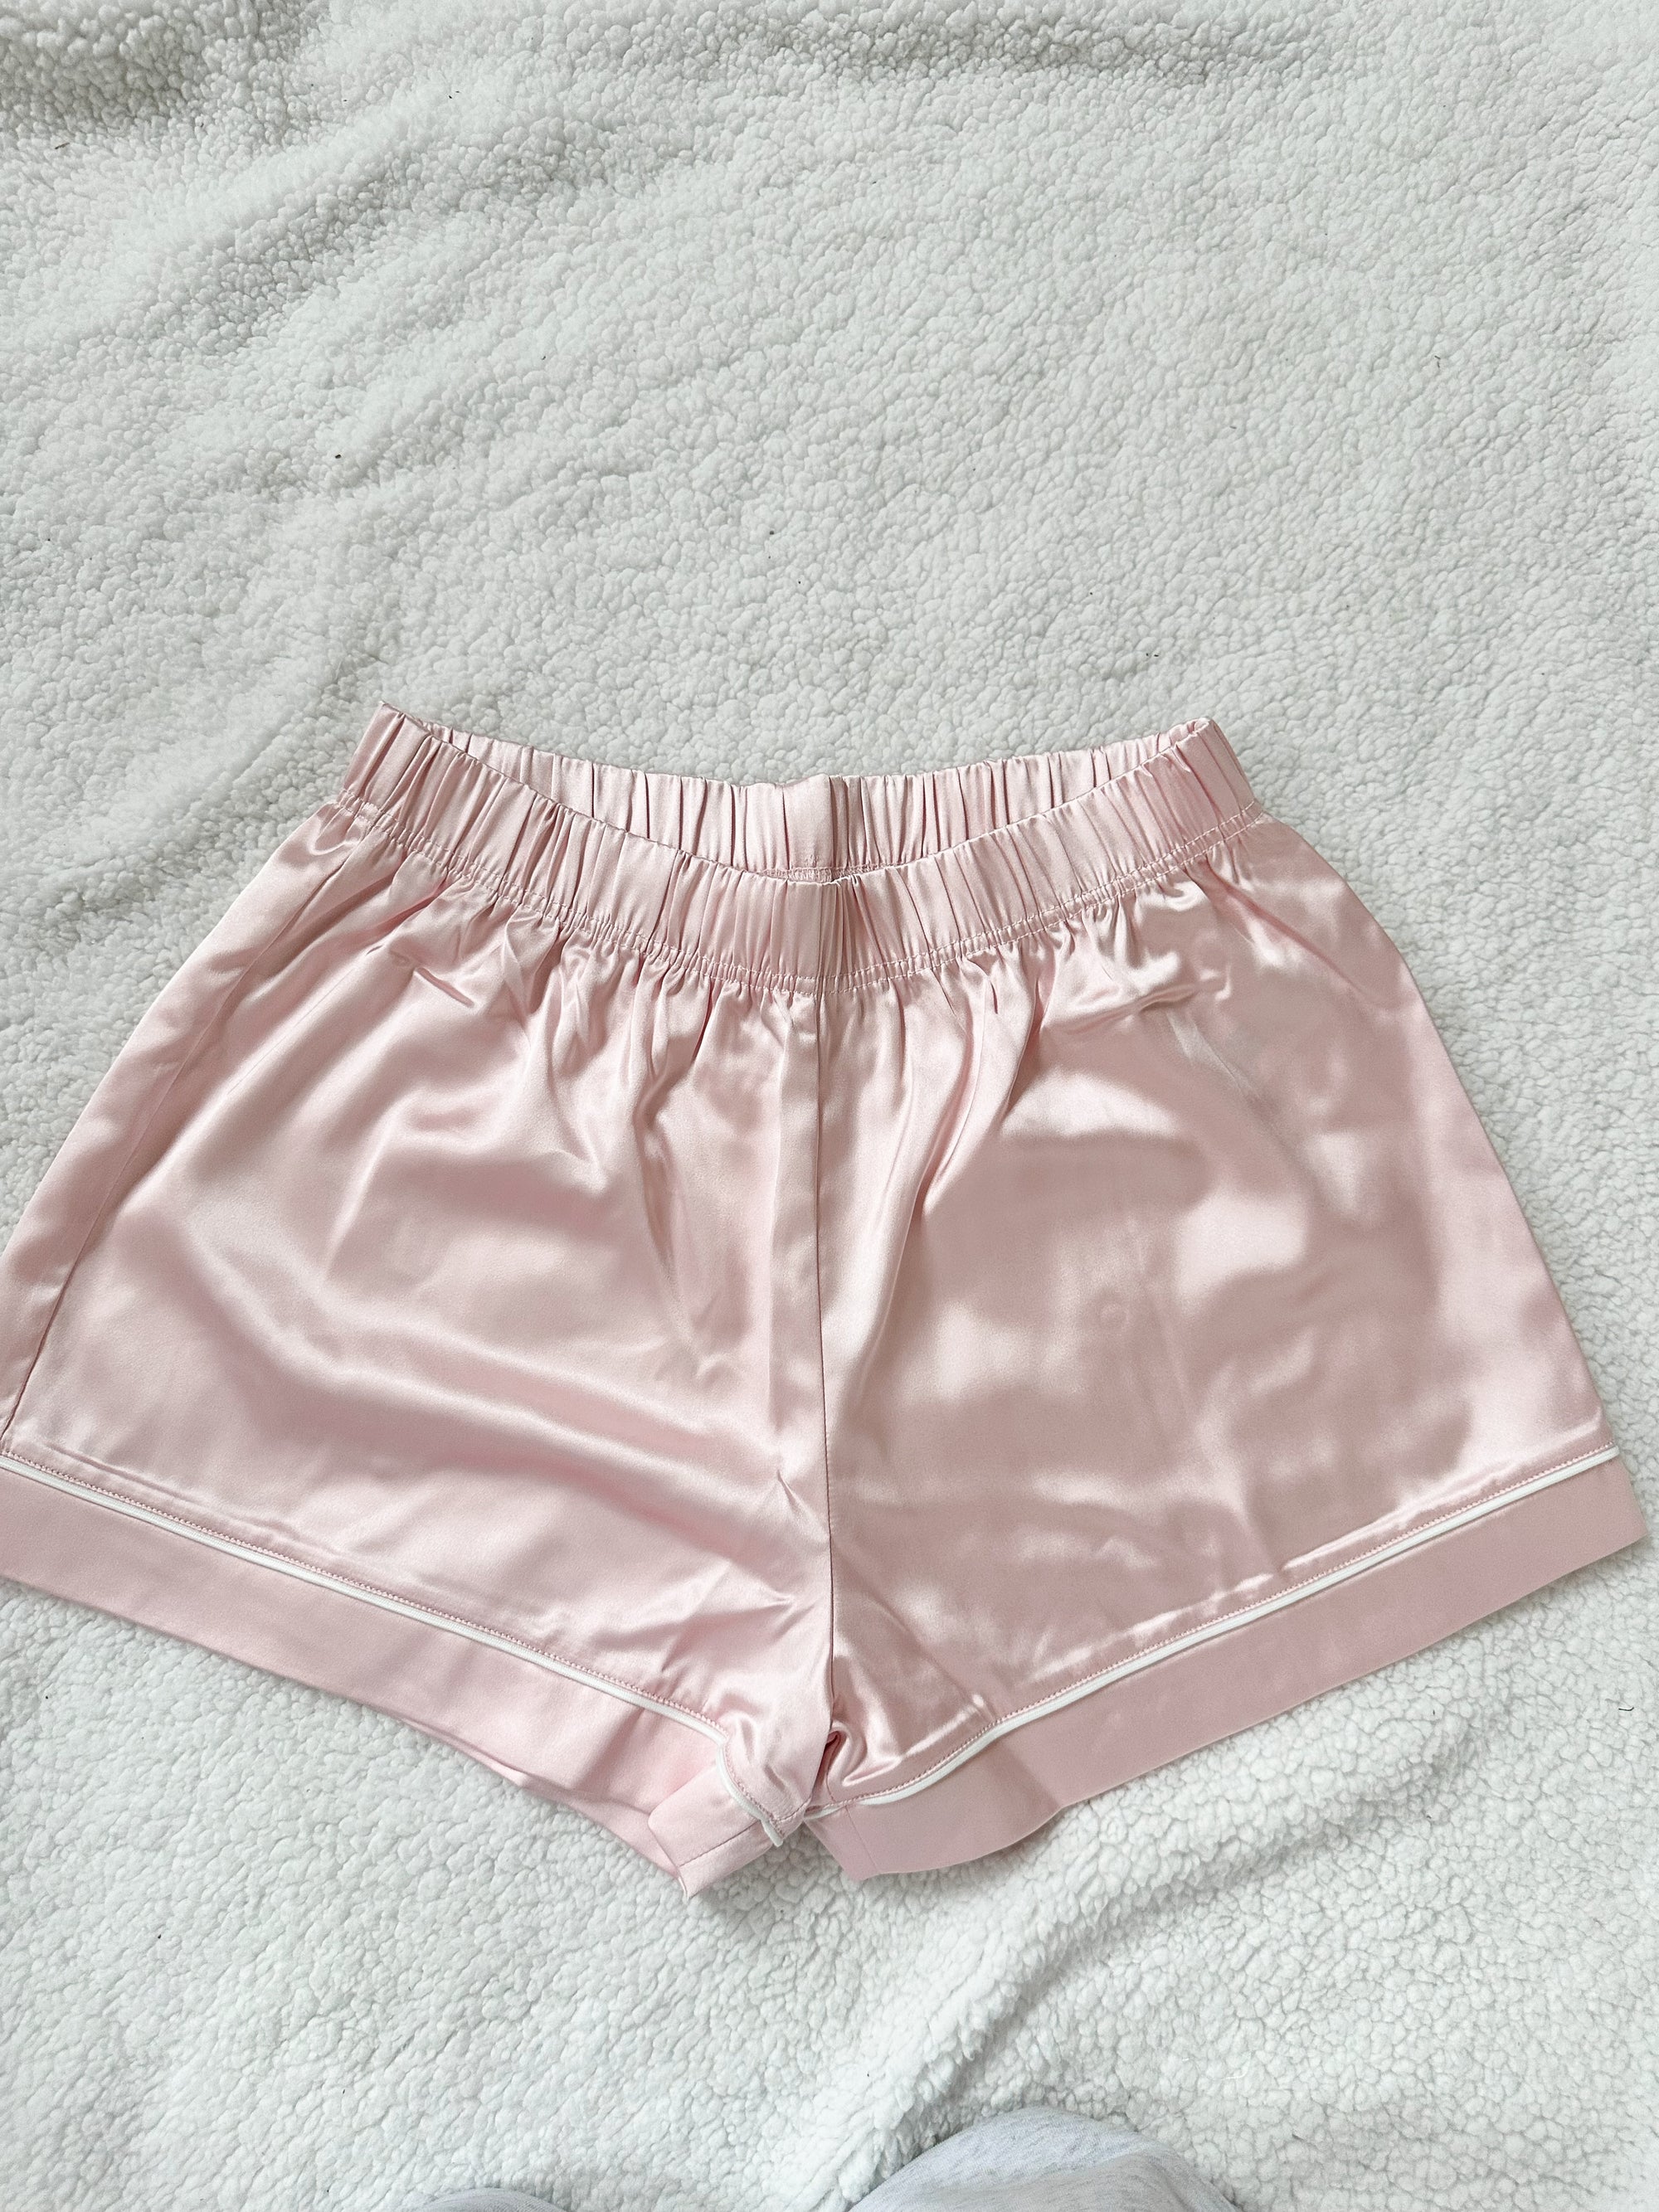 Champagne Pink Pajama Set